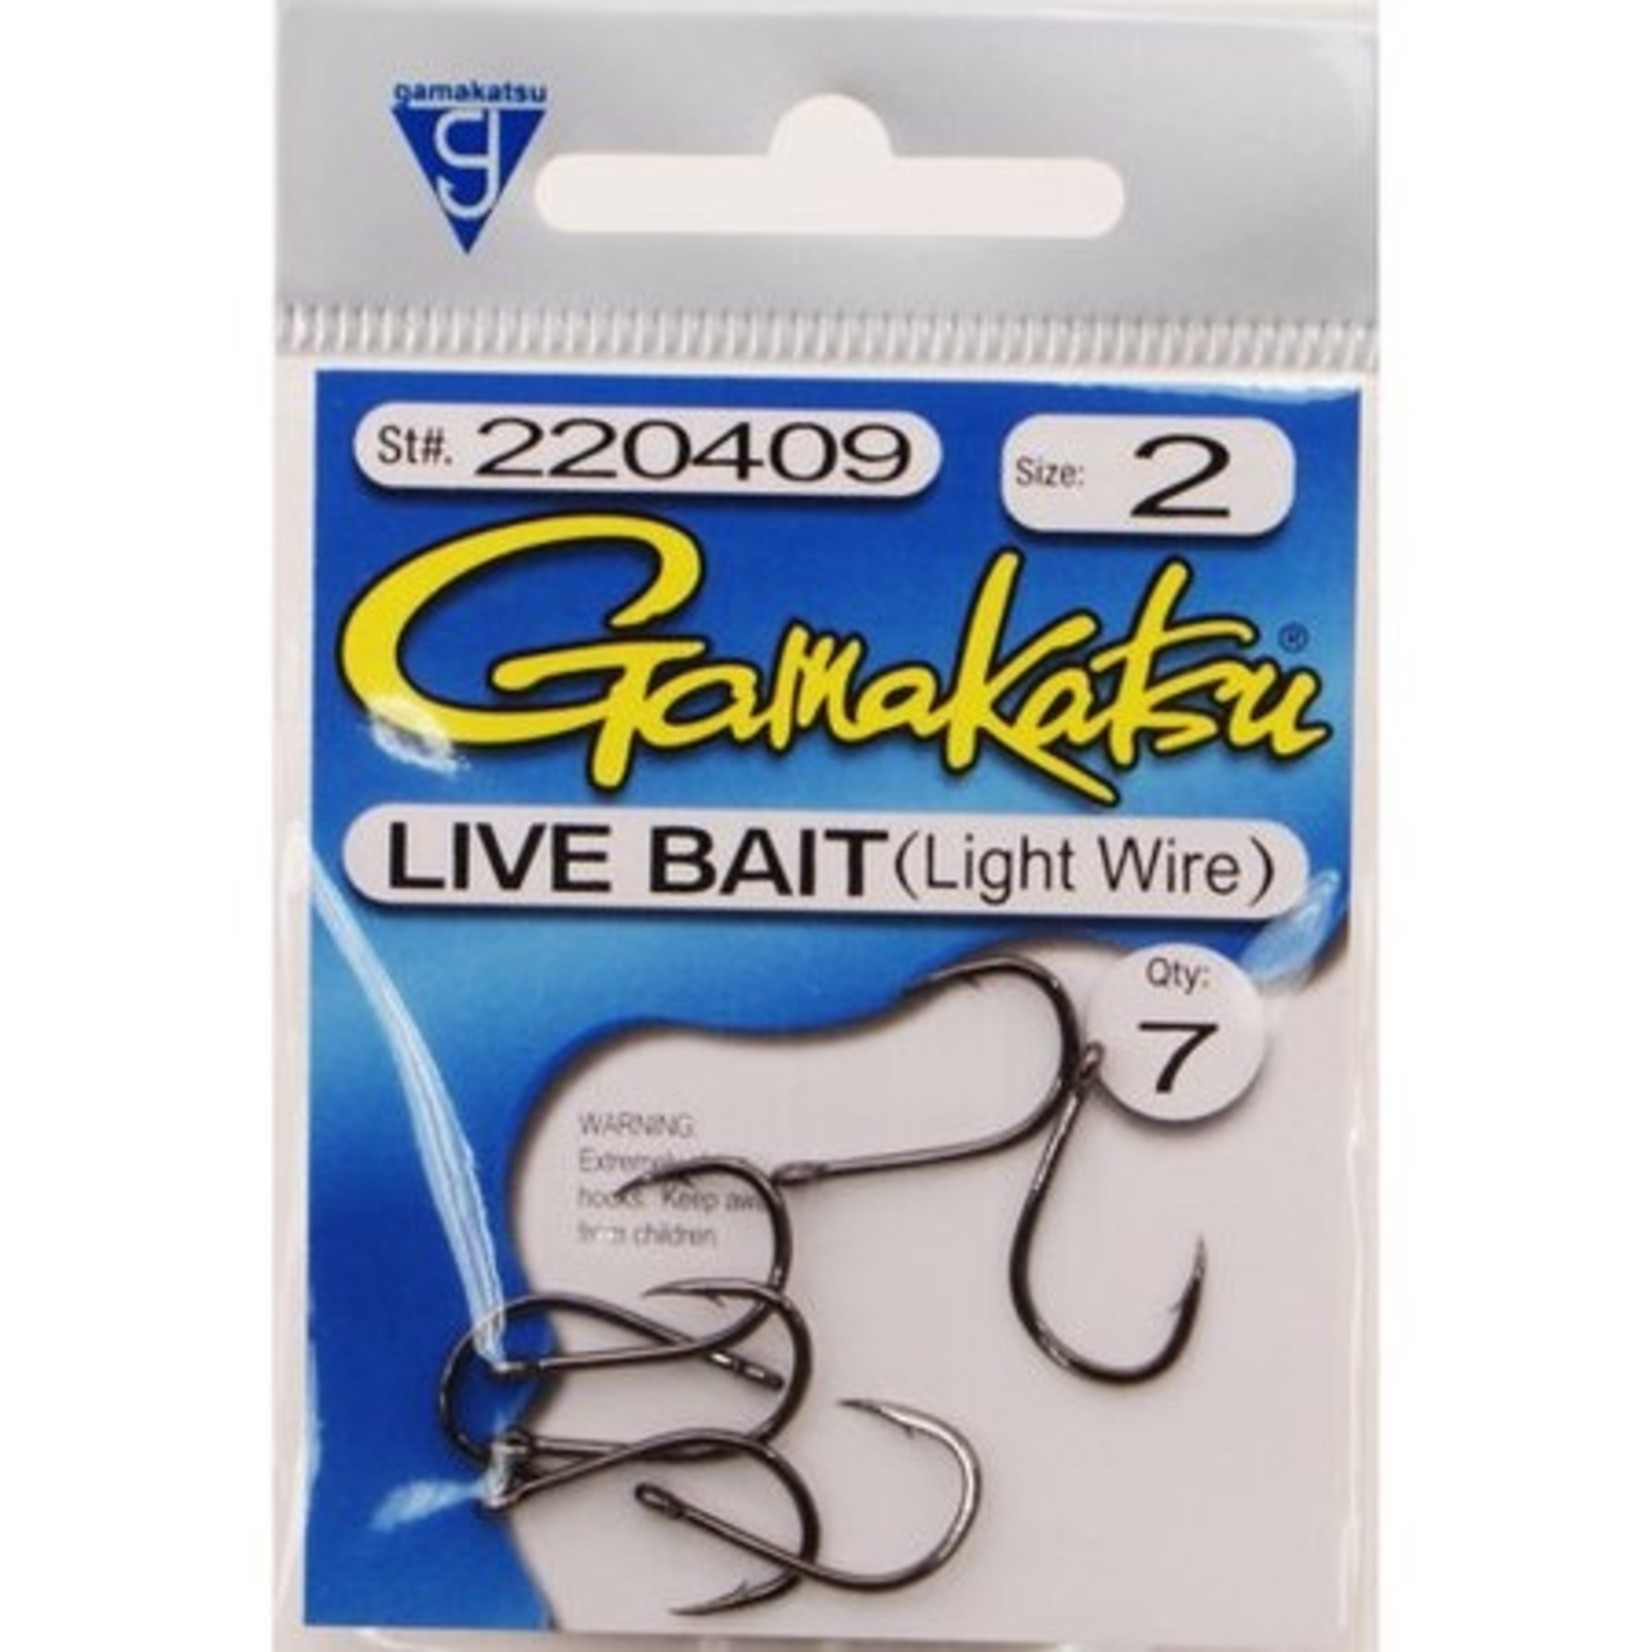 Gamakatsu Hook - Small Live Bait - Csige Tackle: Pacific Rim Fishing